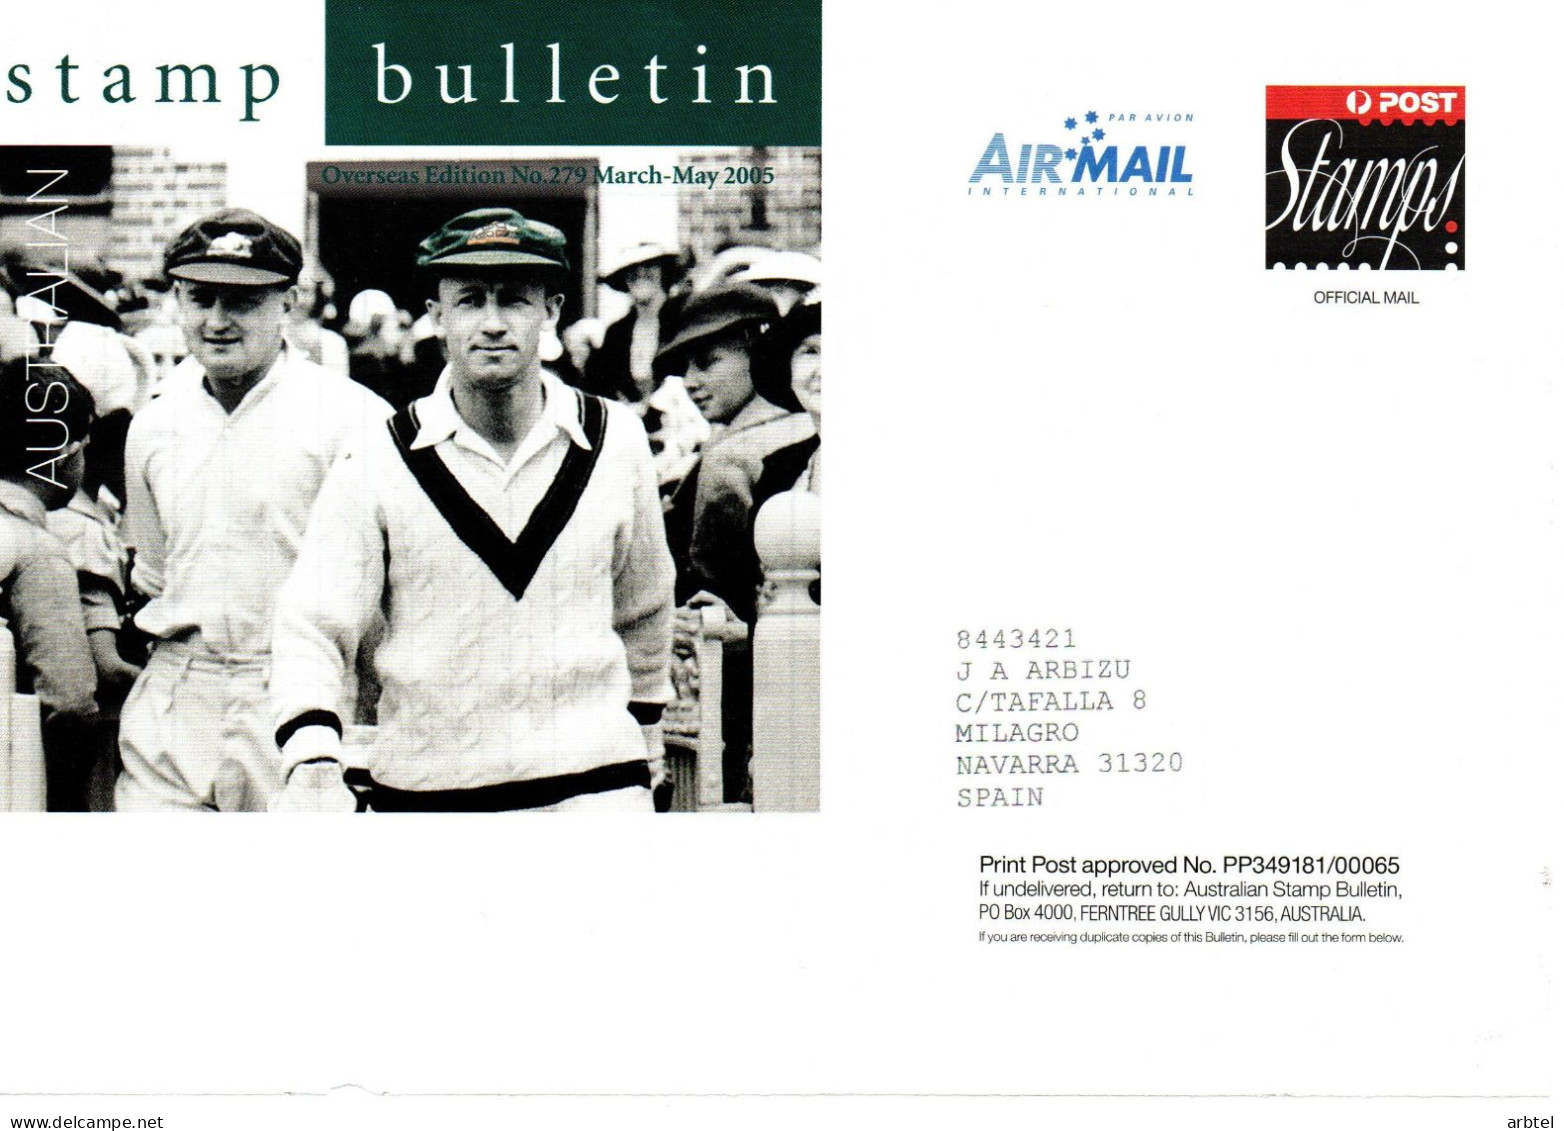 AUSTRALIA STAMP BULLETIN FRONTAL FRONT OFFICIAL MAIL 2005 AUSTRALIAN SPORT - Storia Postale